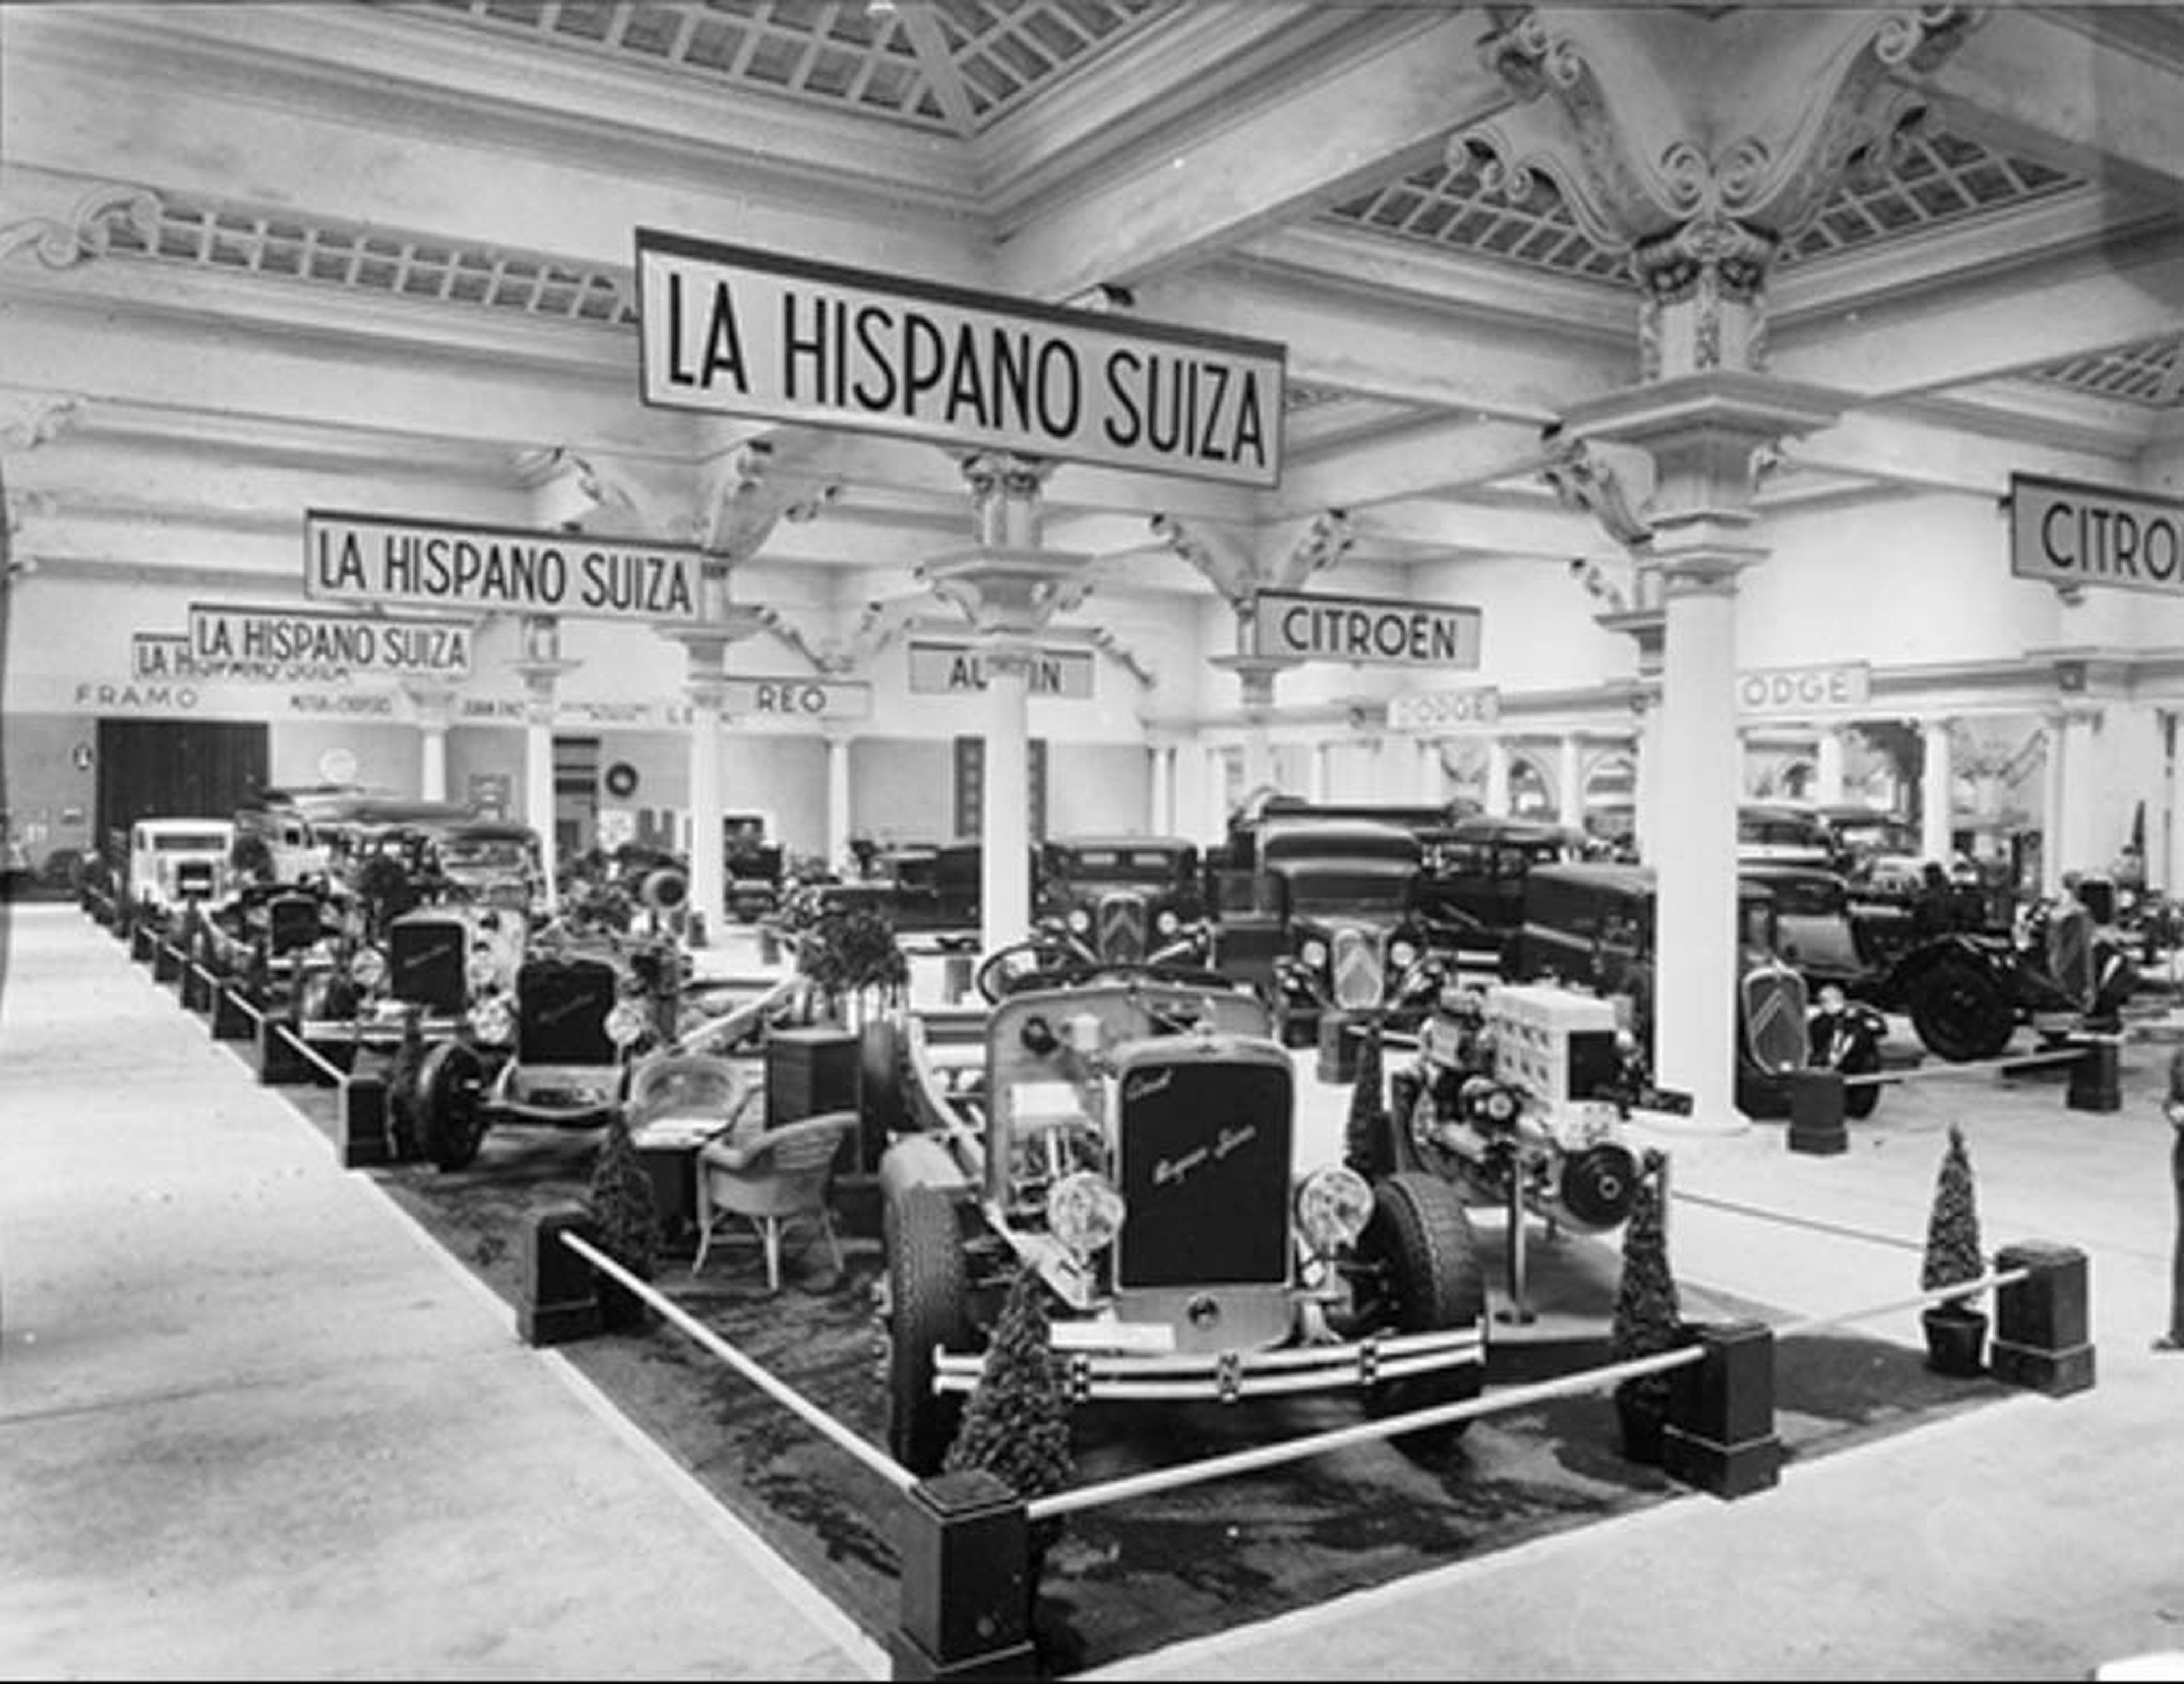 ¿Quién mató a Hispano-Suiza?